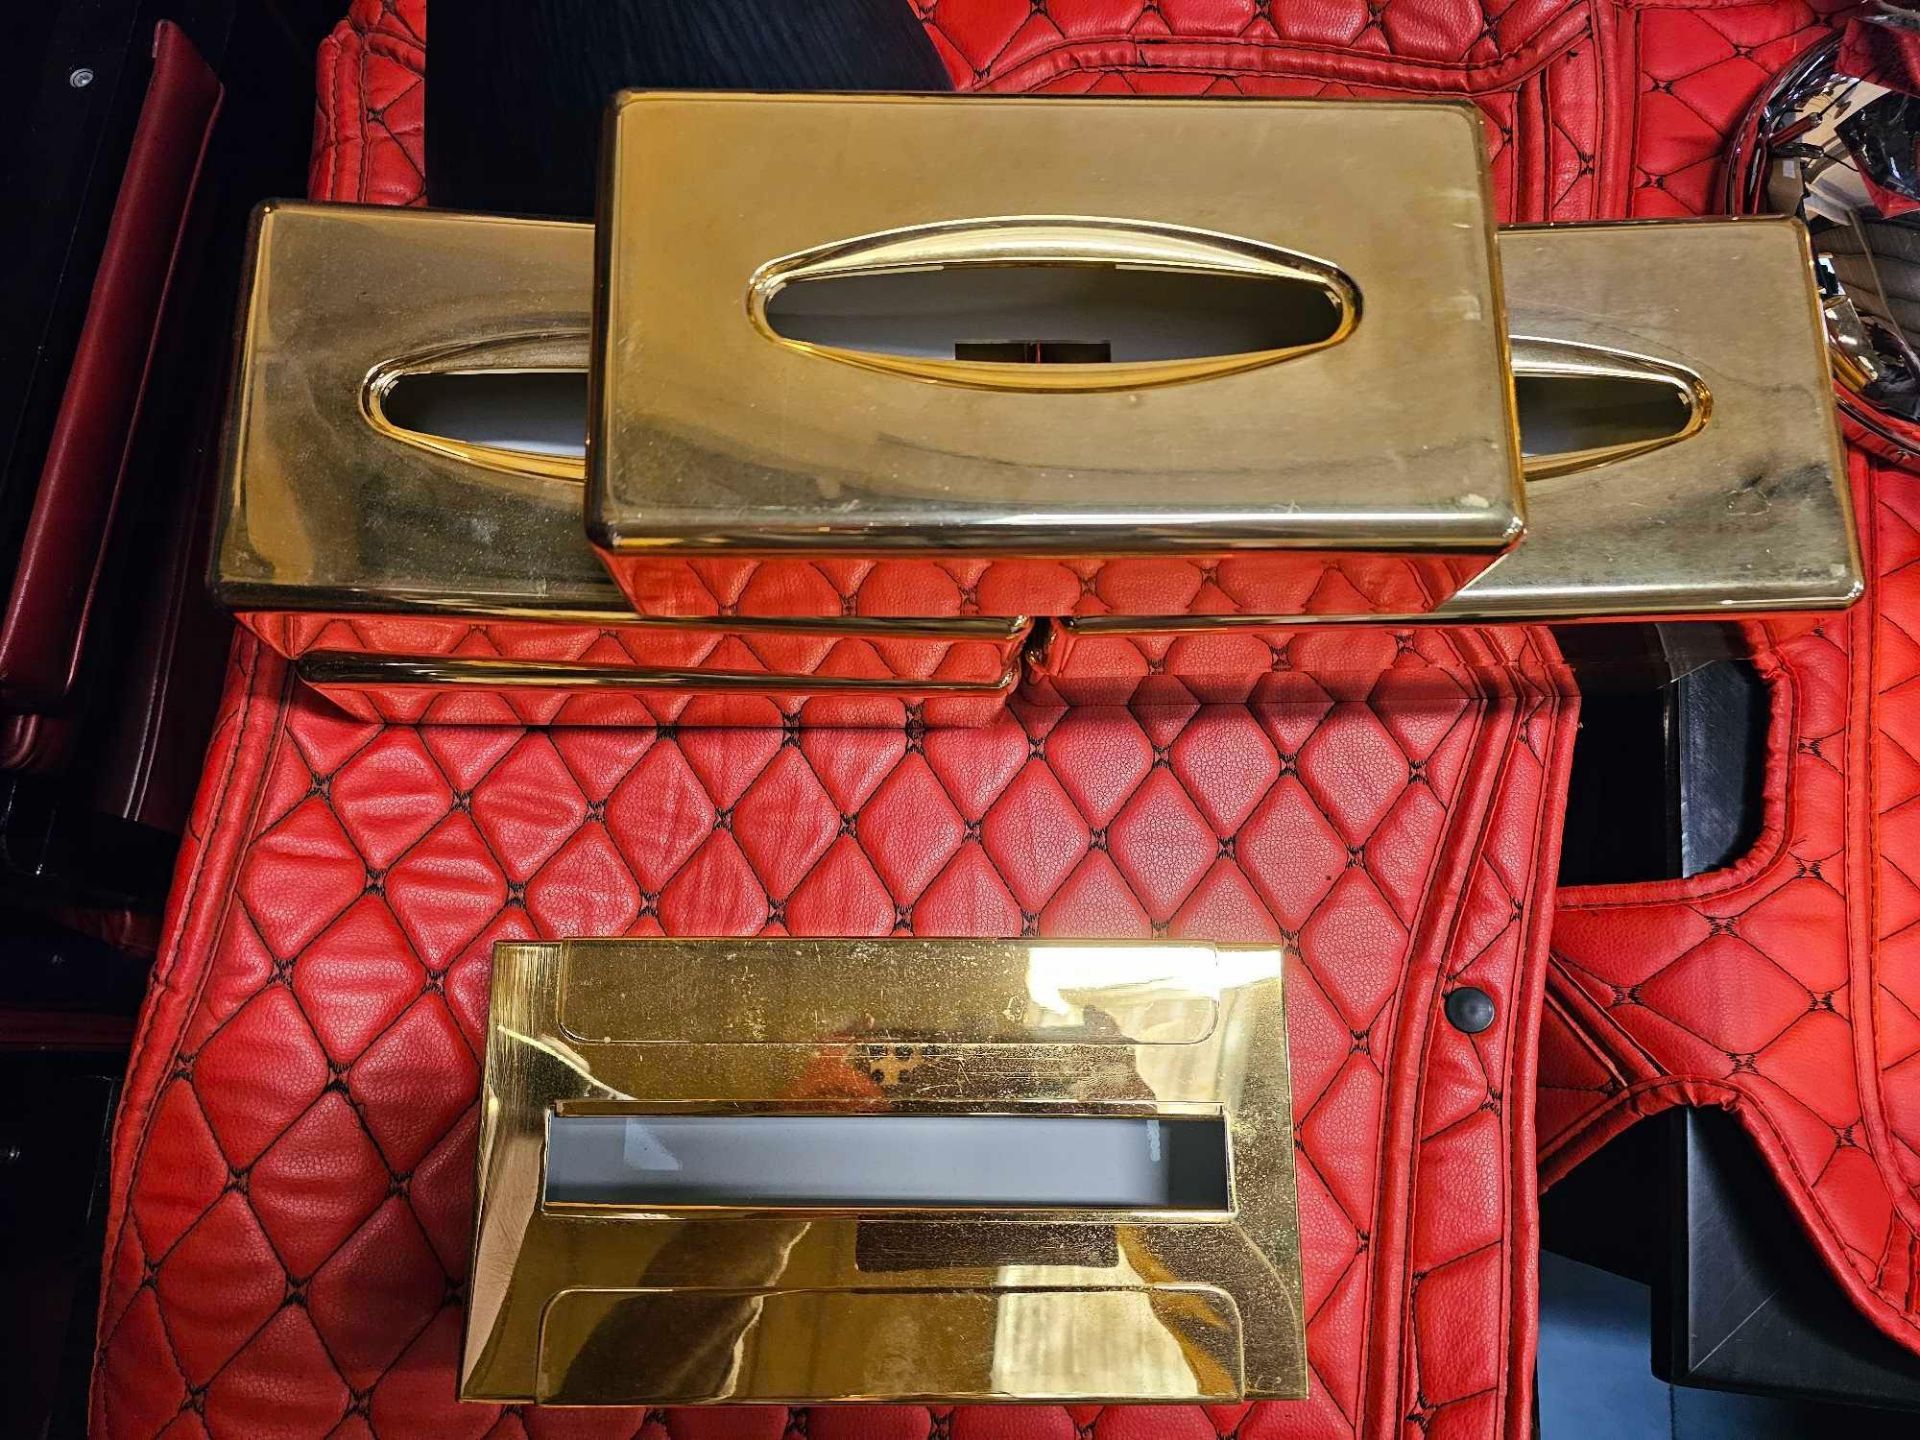 6 x Fdit Gold Stainless Steel Tissue Box, Decorative Metal Tissue Holder Cover Napkin Dispenser - Image 2 of 2